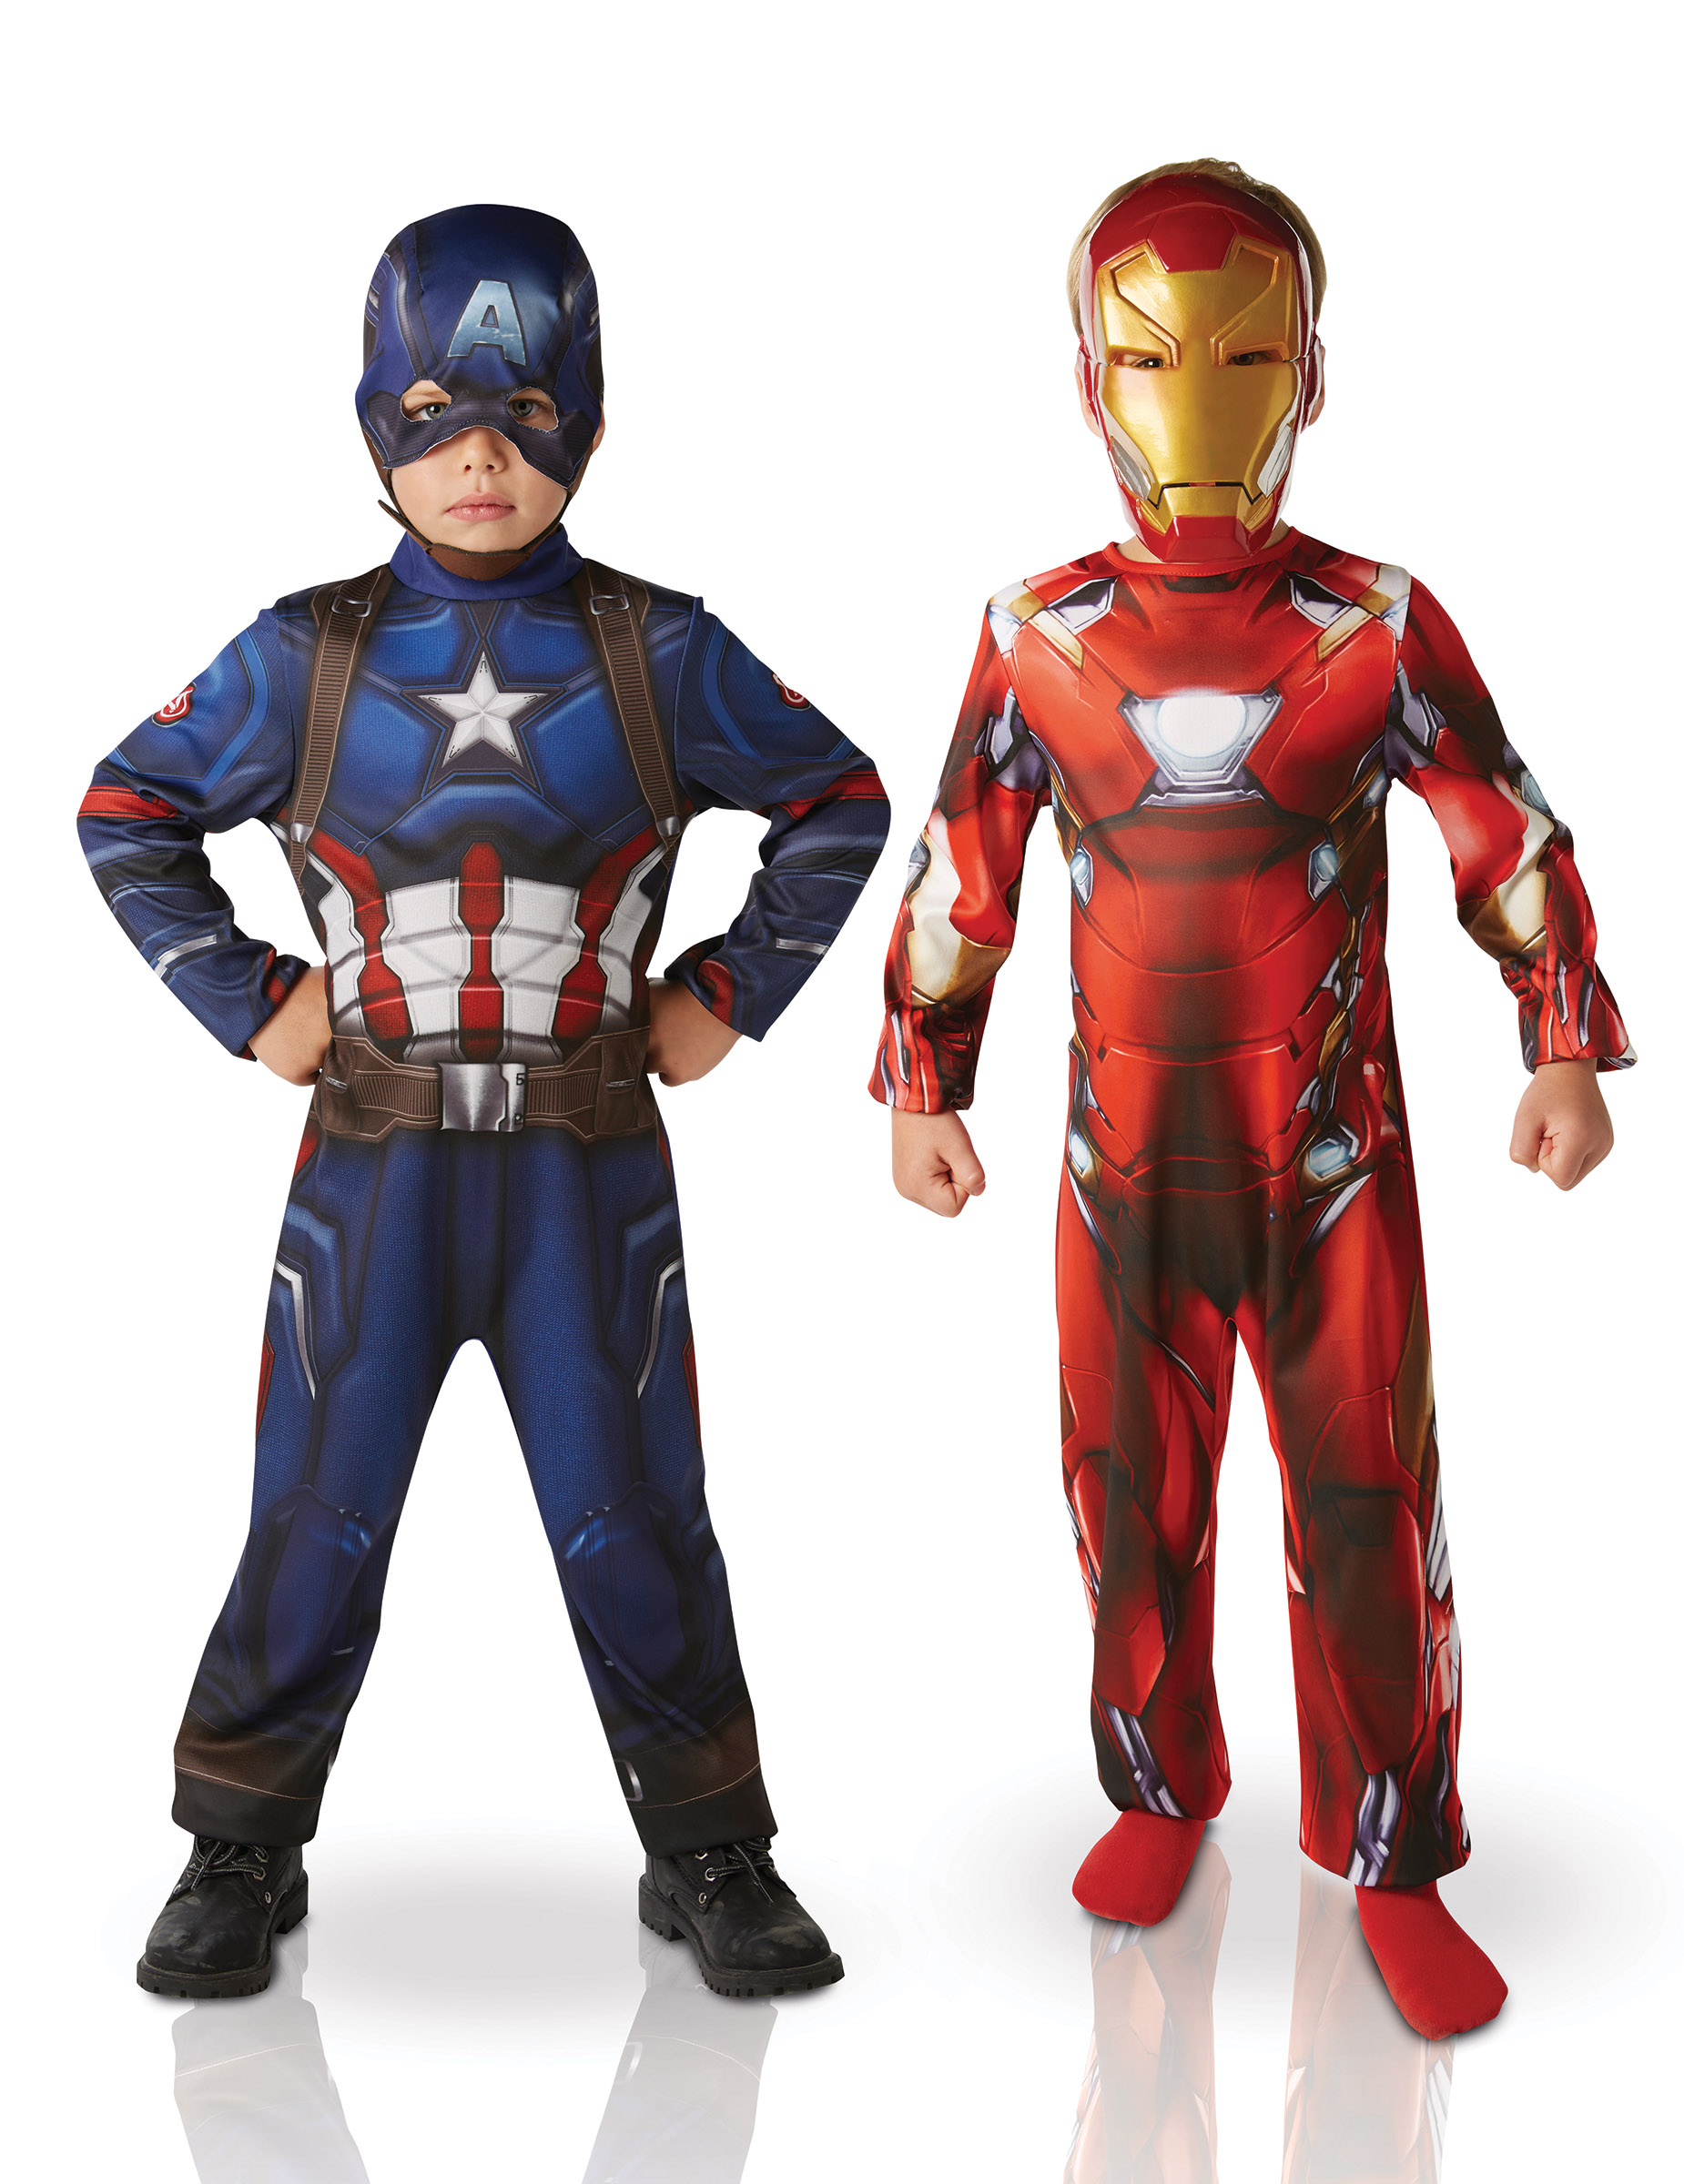 Costume enfant Captain America bleu, rouge et blanc - License Marvel